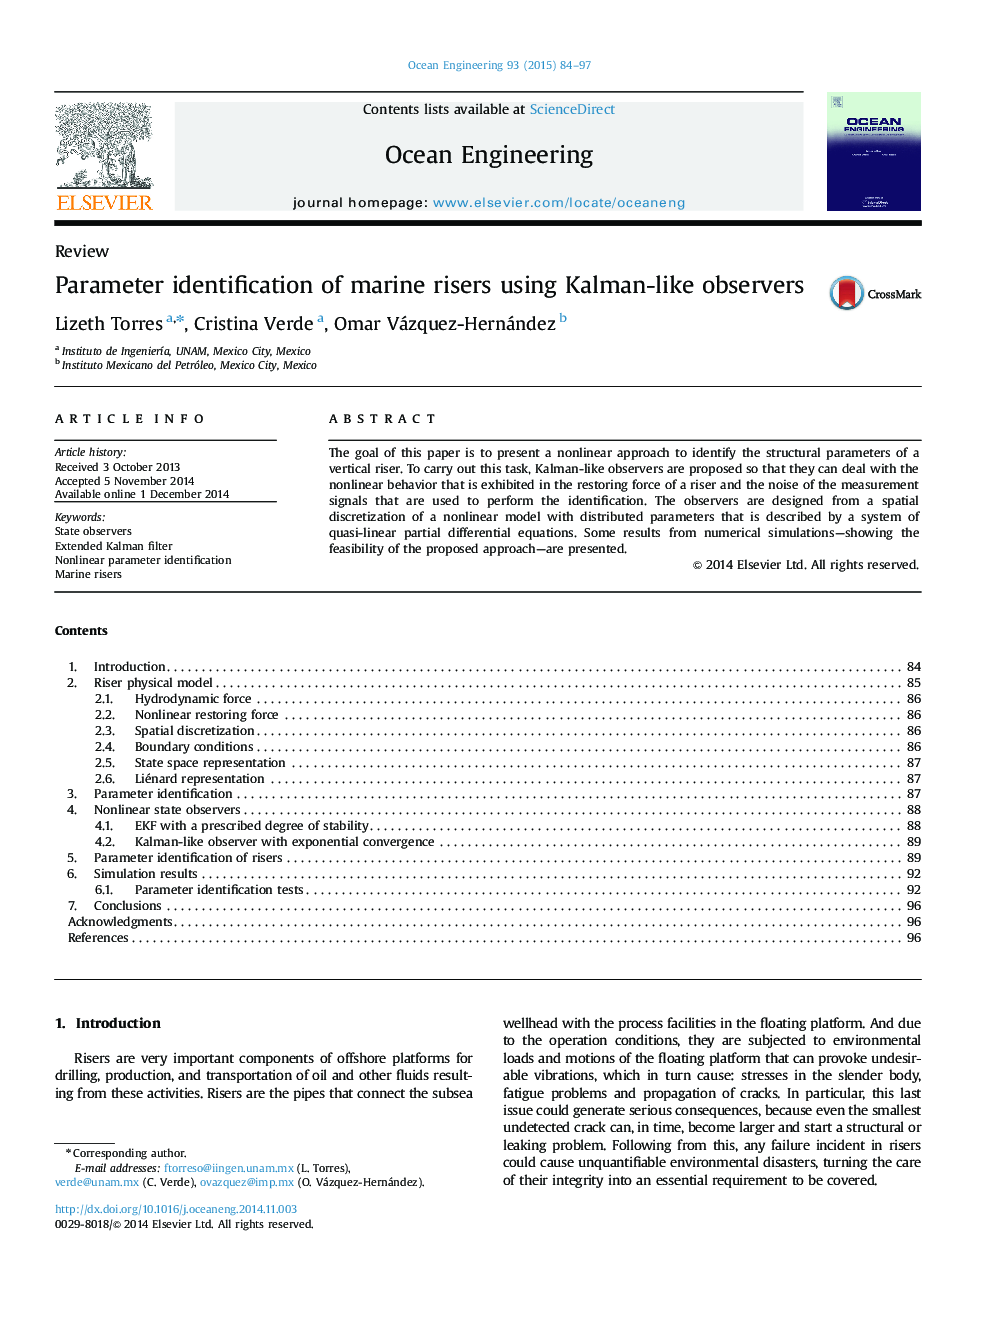 Parameter identification of marine risers using Kalman-like observers